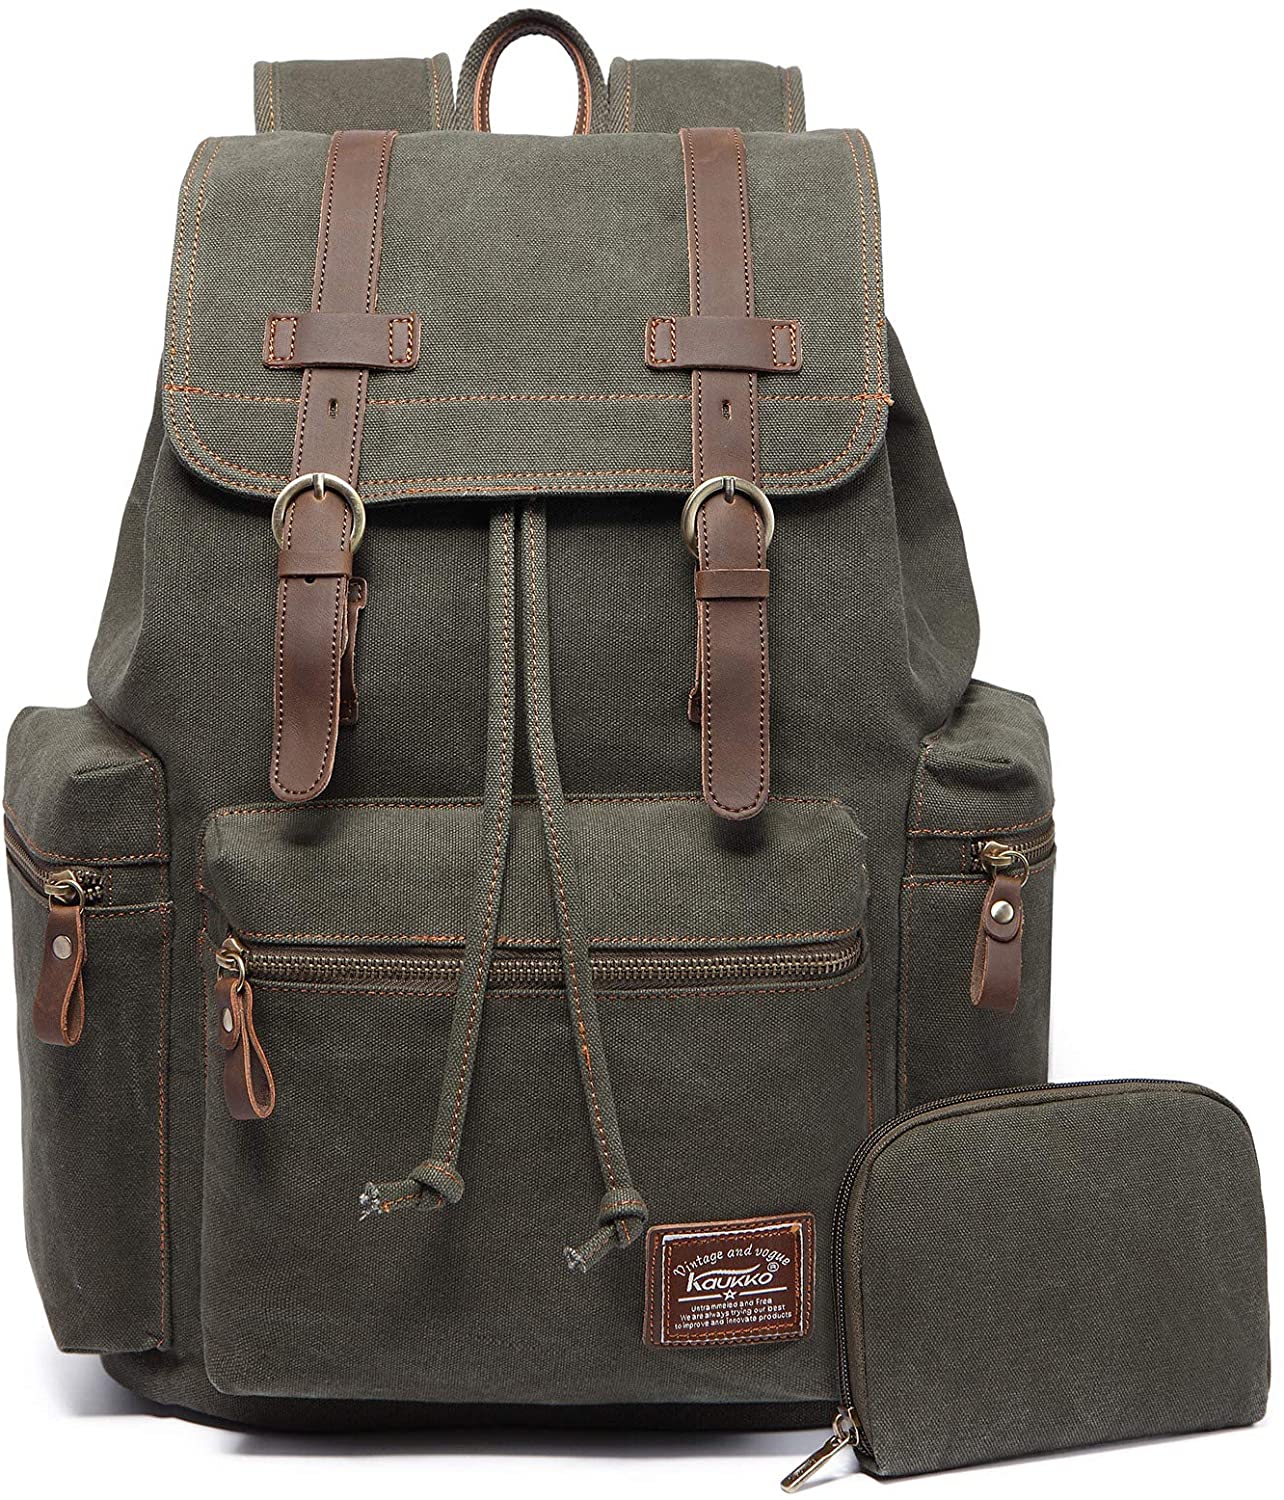 Vintage canvas backpacks Men Bags